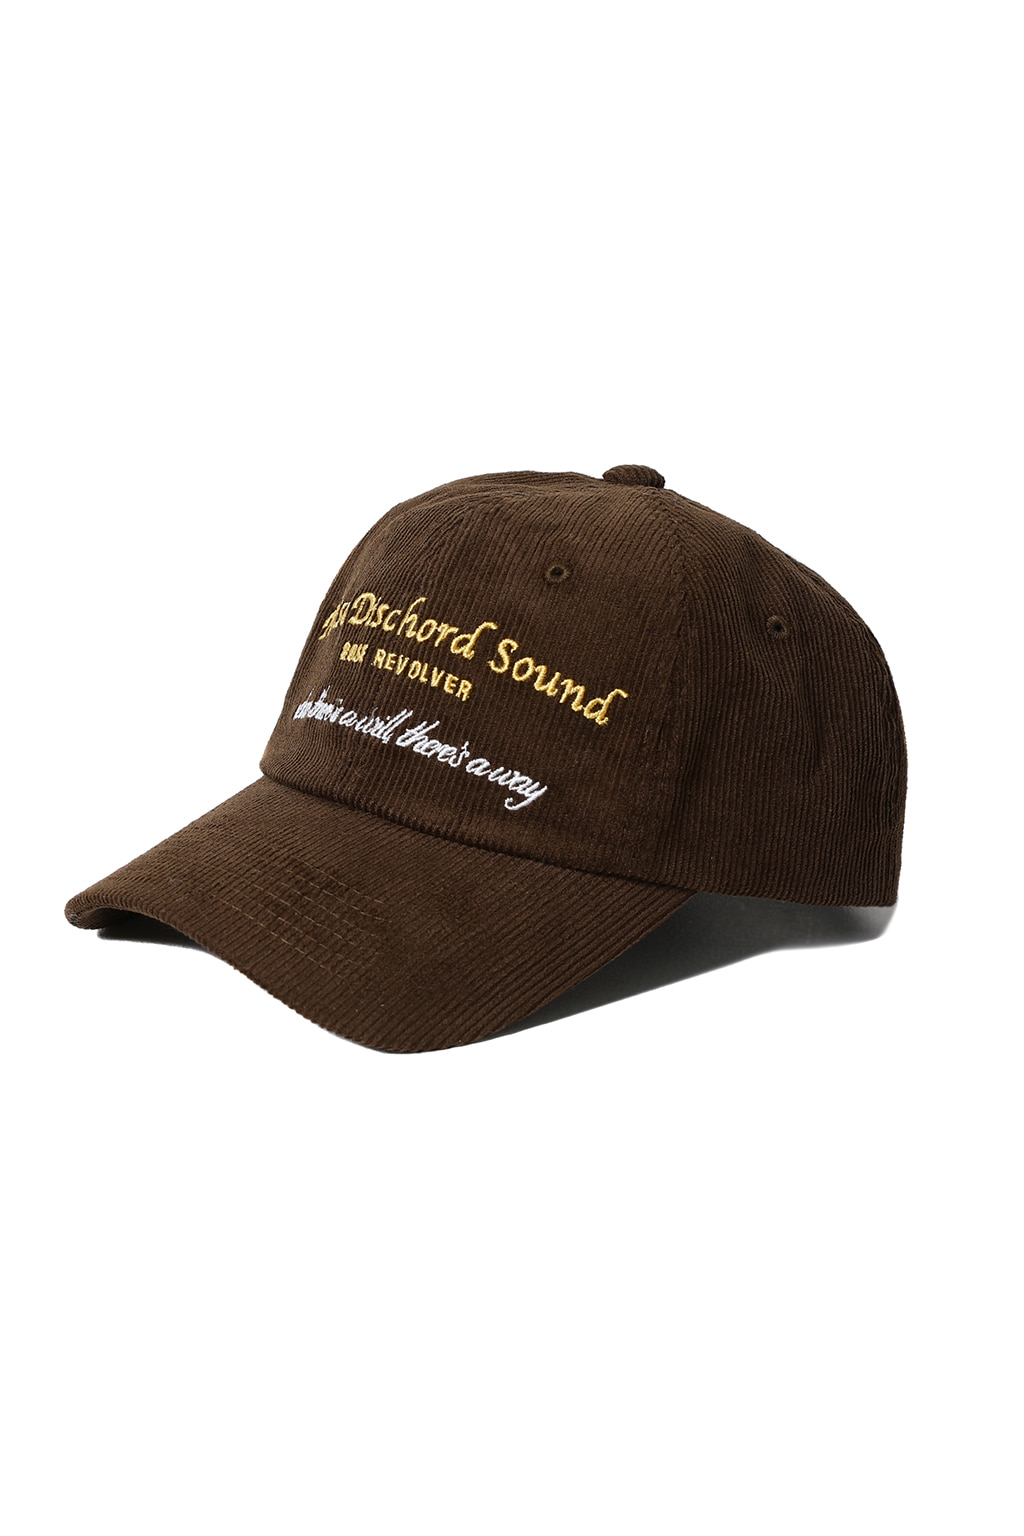 SLOGAN BALL CAP [BROWN]